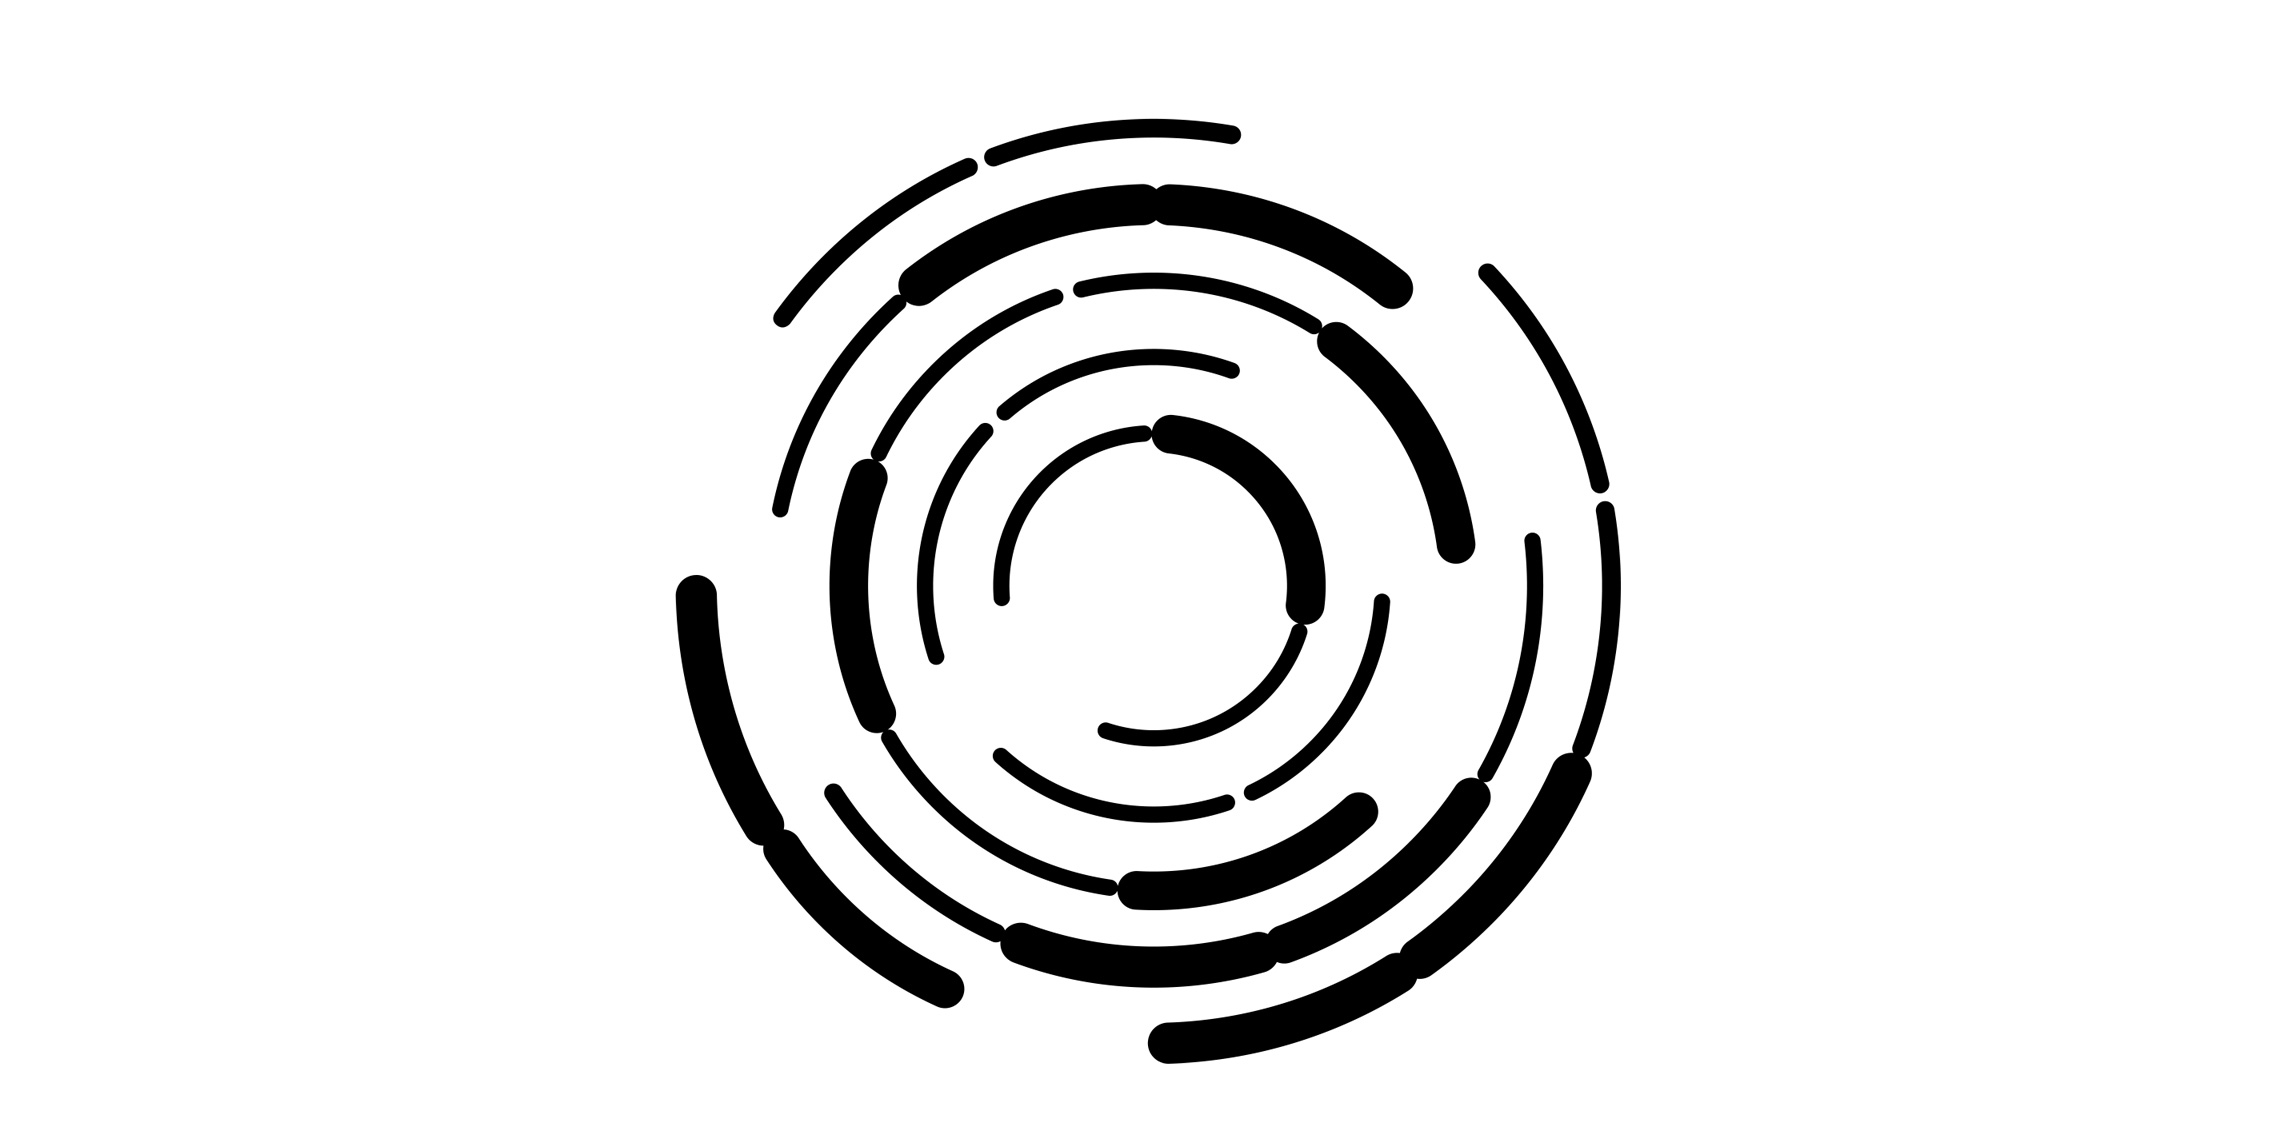 World's Best School Prizes main ripple logo symbol